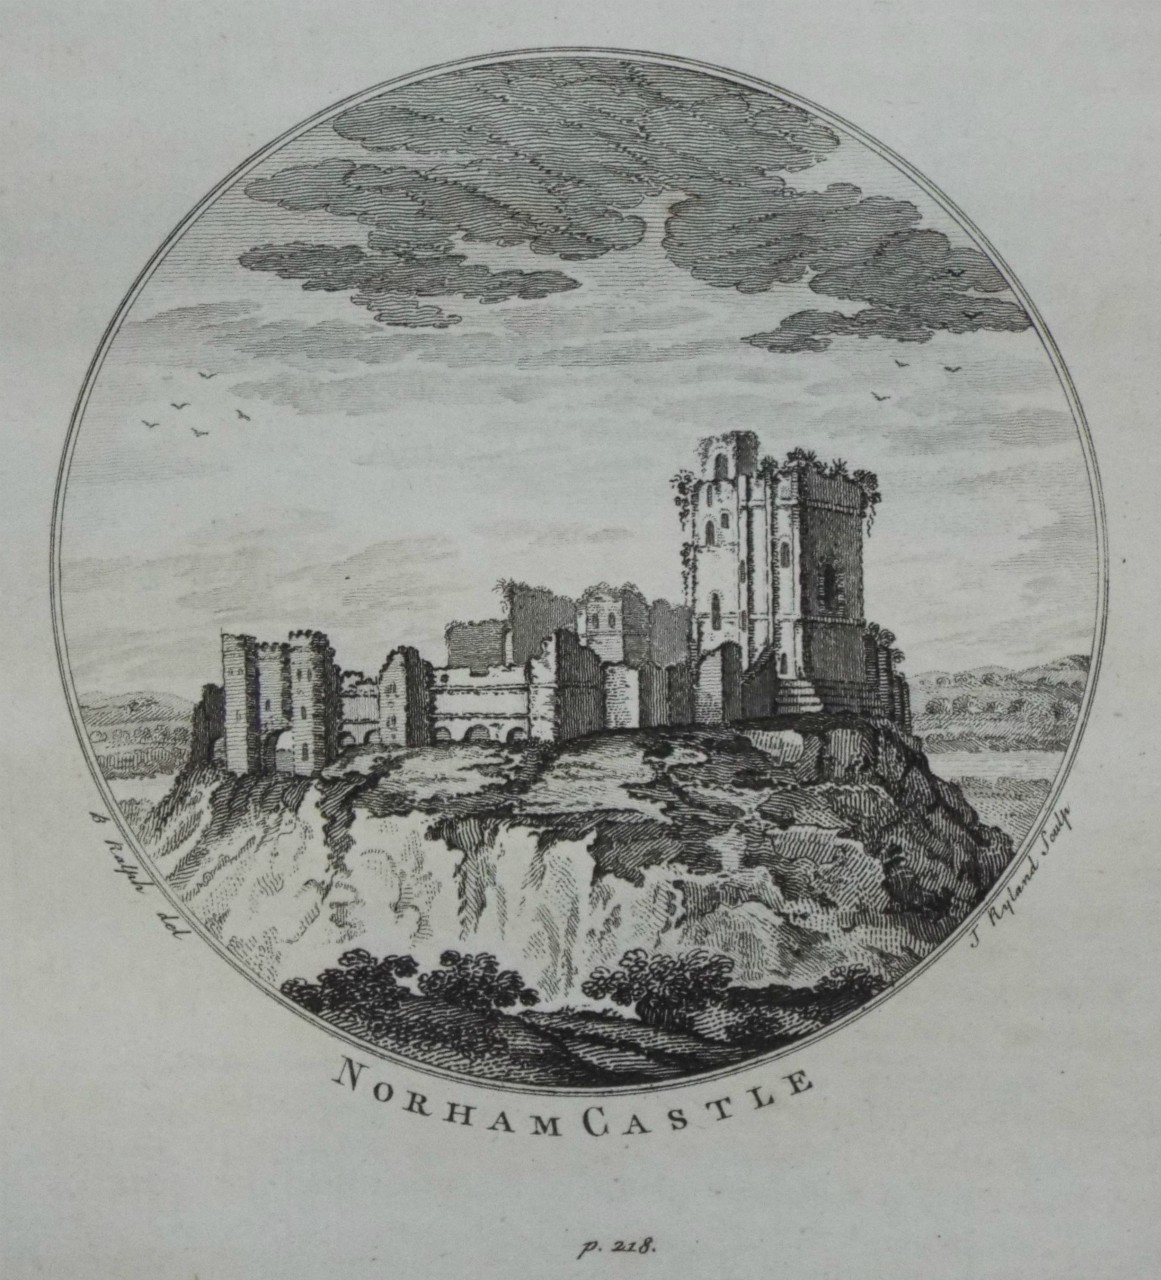 Print - Norham Castle p.218. - Ryland